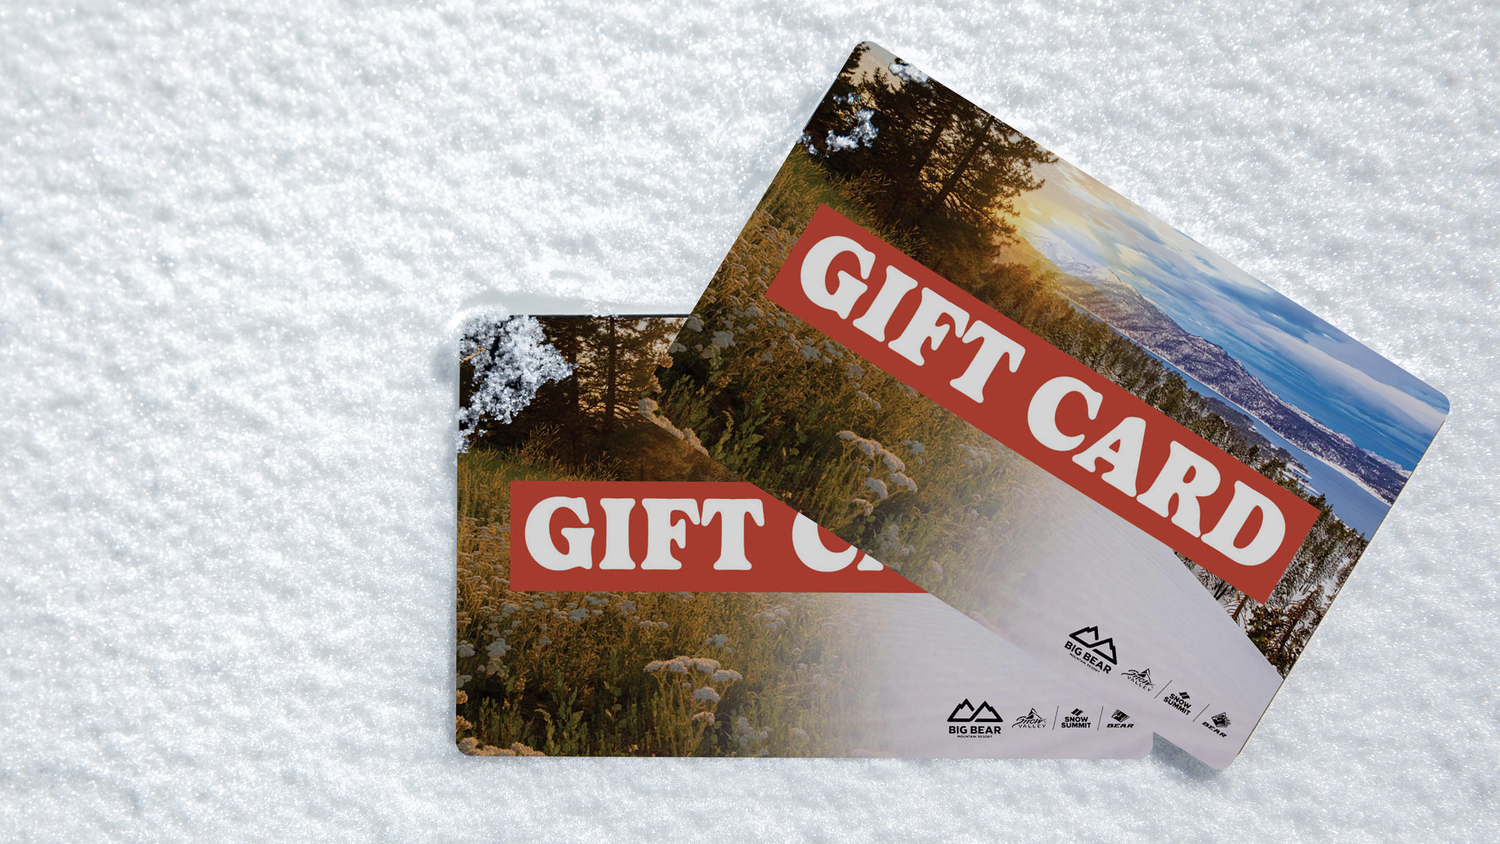 Big Bear Mountain Resort gift cards laying in snow